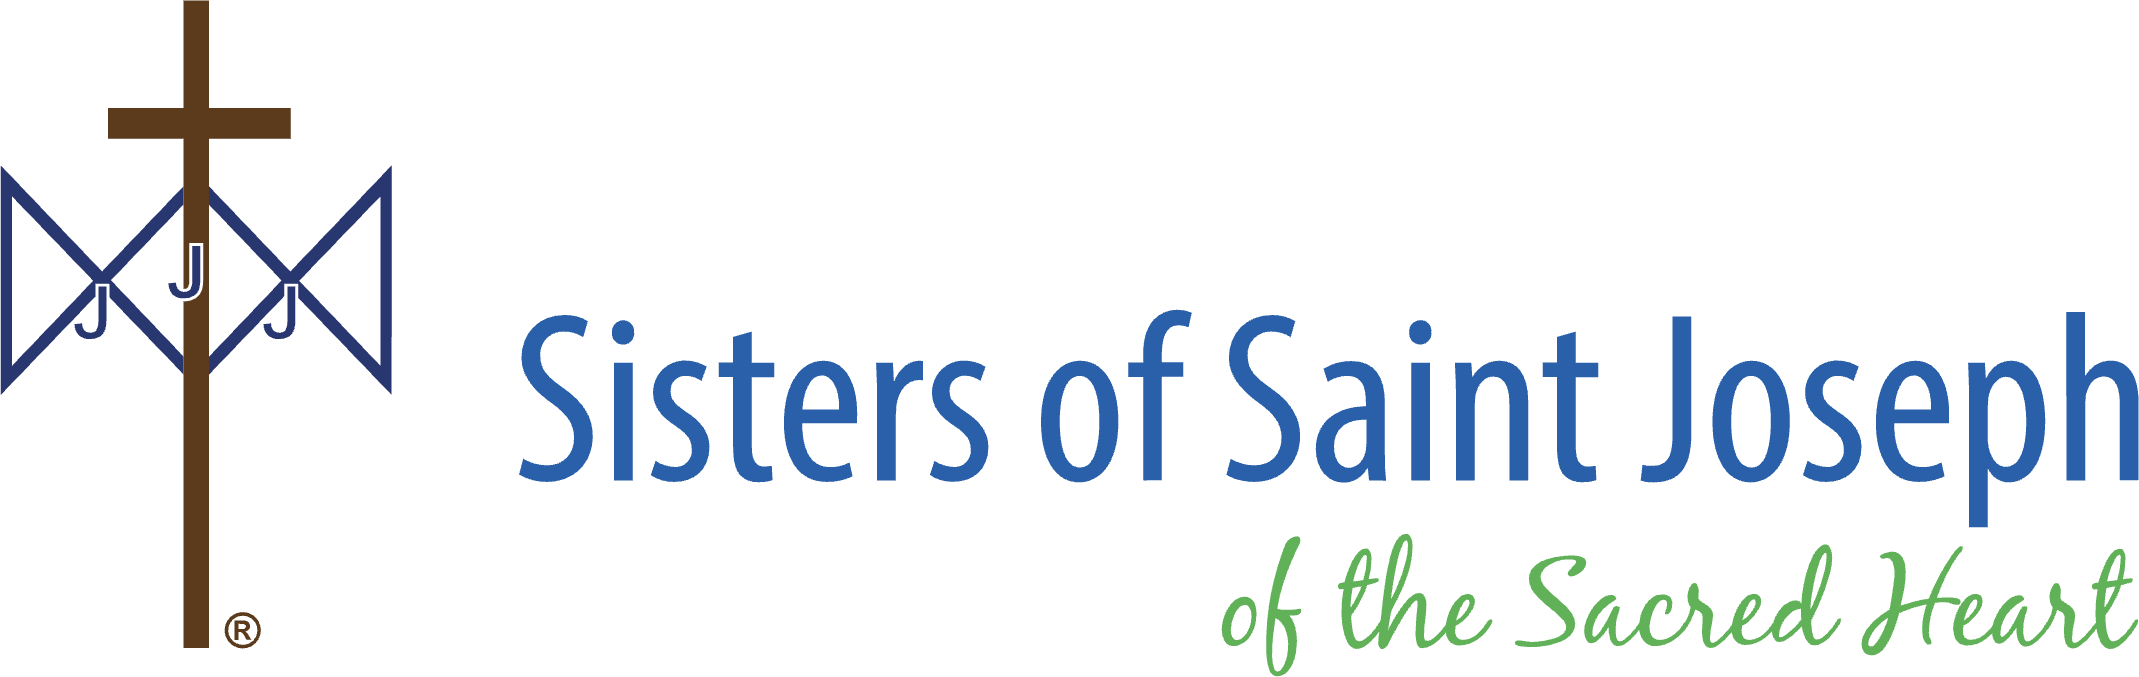 Sisters of Saint Joseph of the Sacred Heart logo